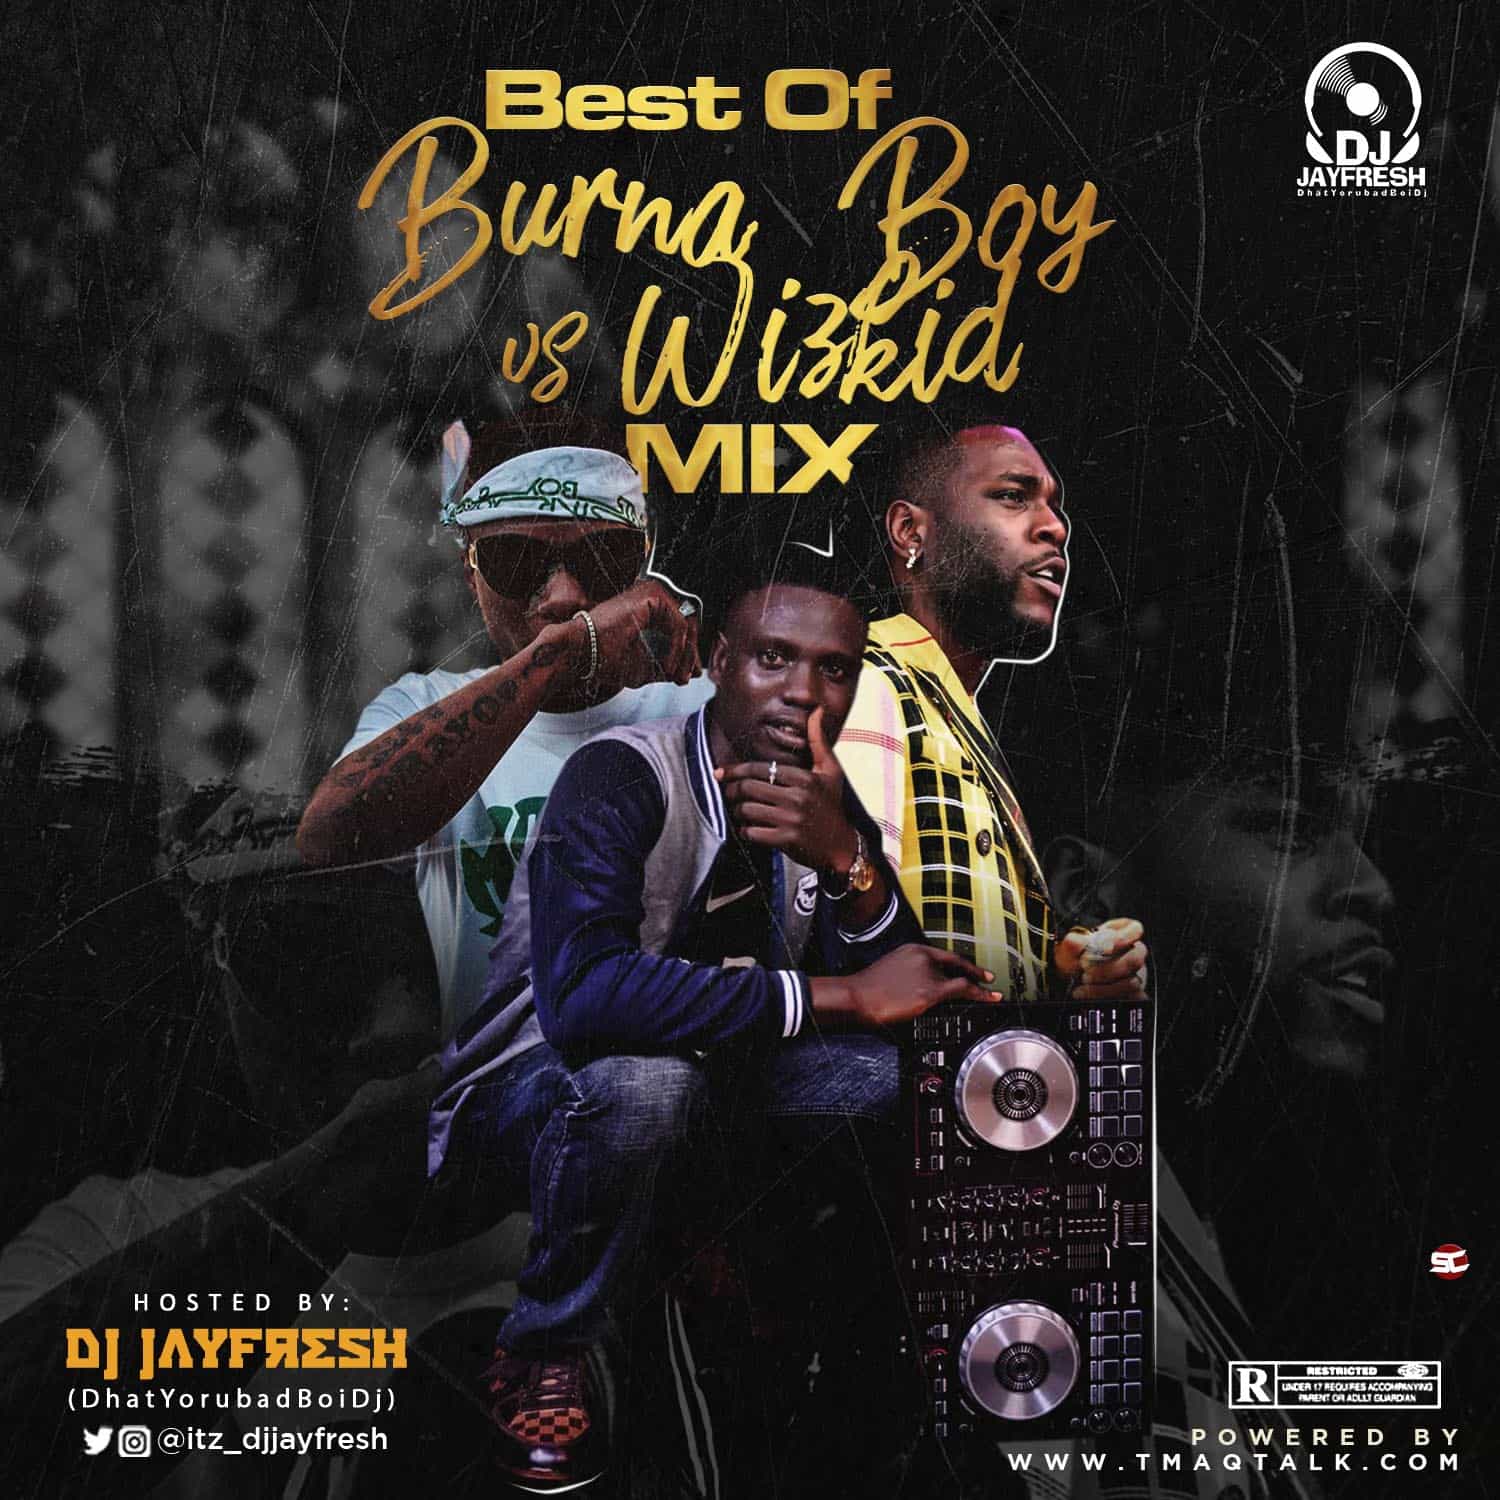 hud Opdater kemikalier MIXTAPE: DJ Jayfresh - "Best of Burna Boy vs Wizkid Mix" 2019 - Novice2star